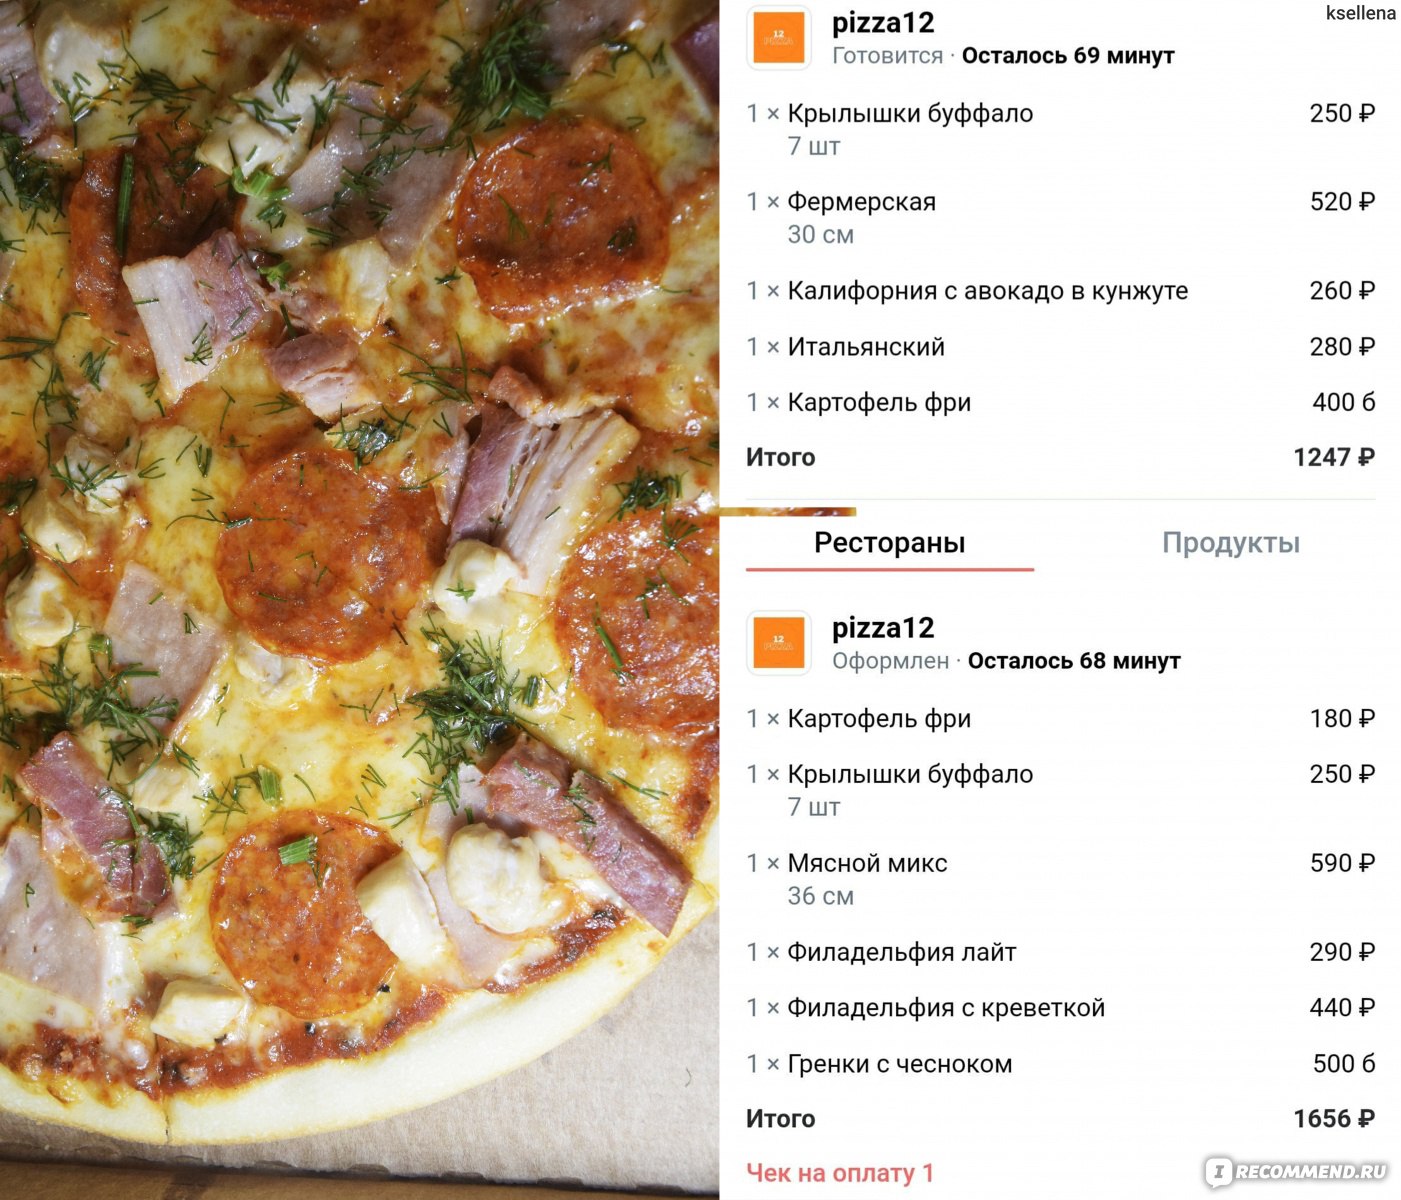 Pizza12, Москва цены